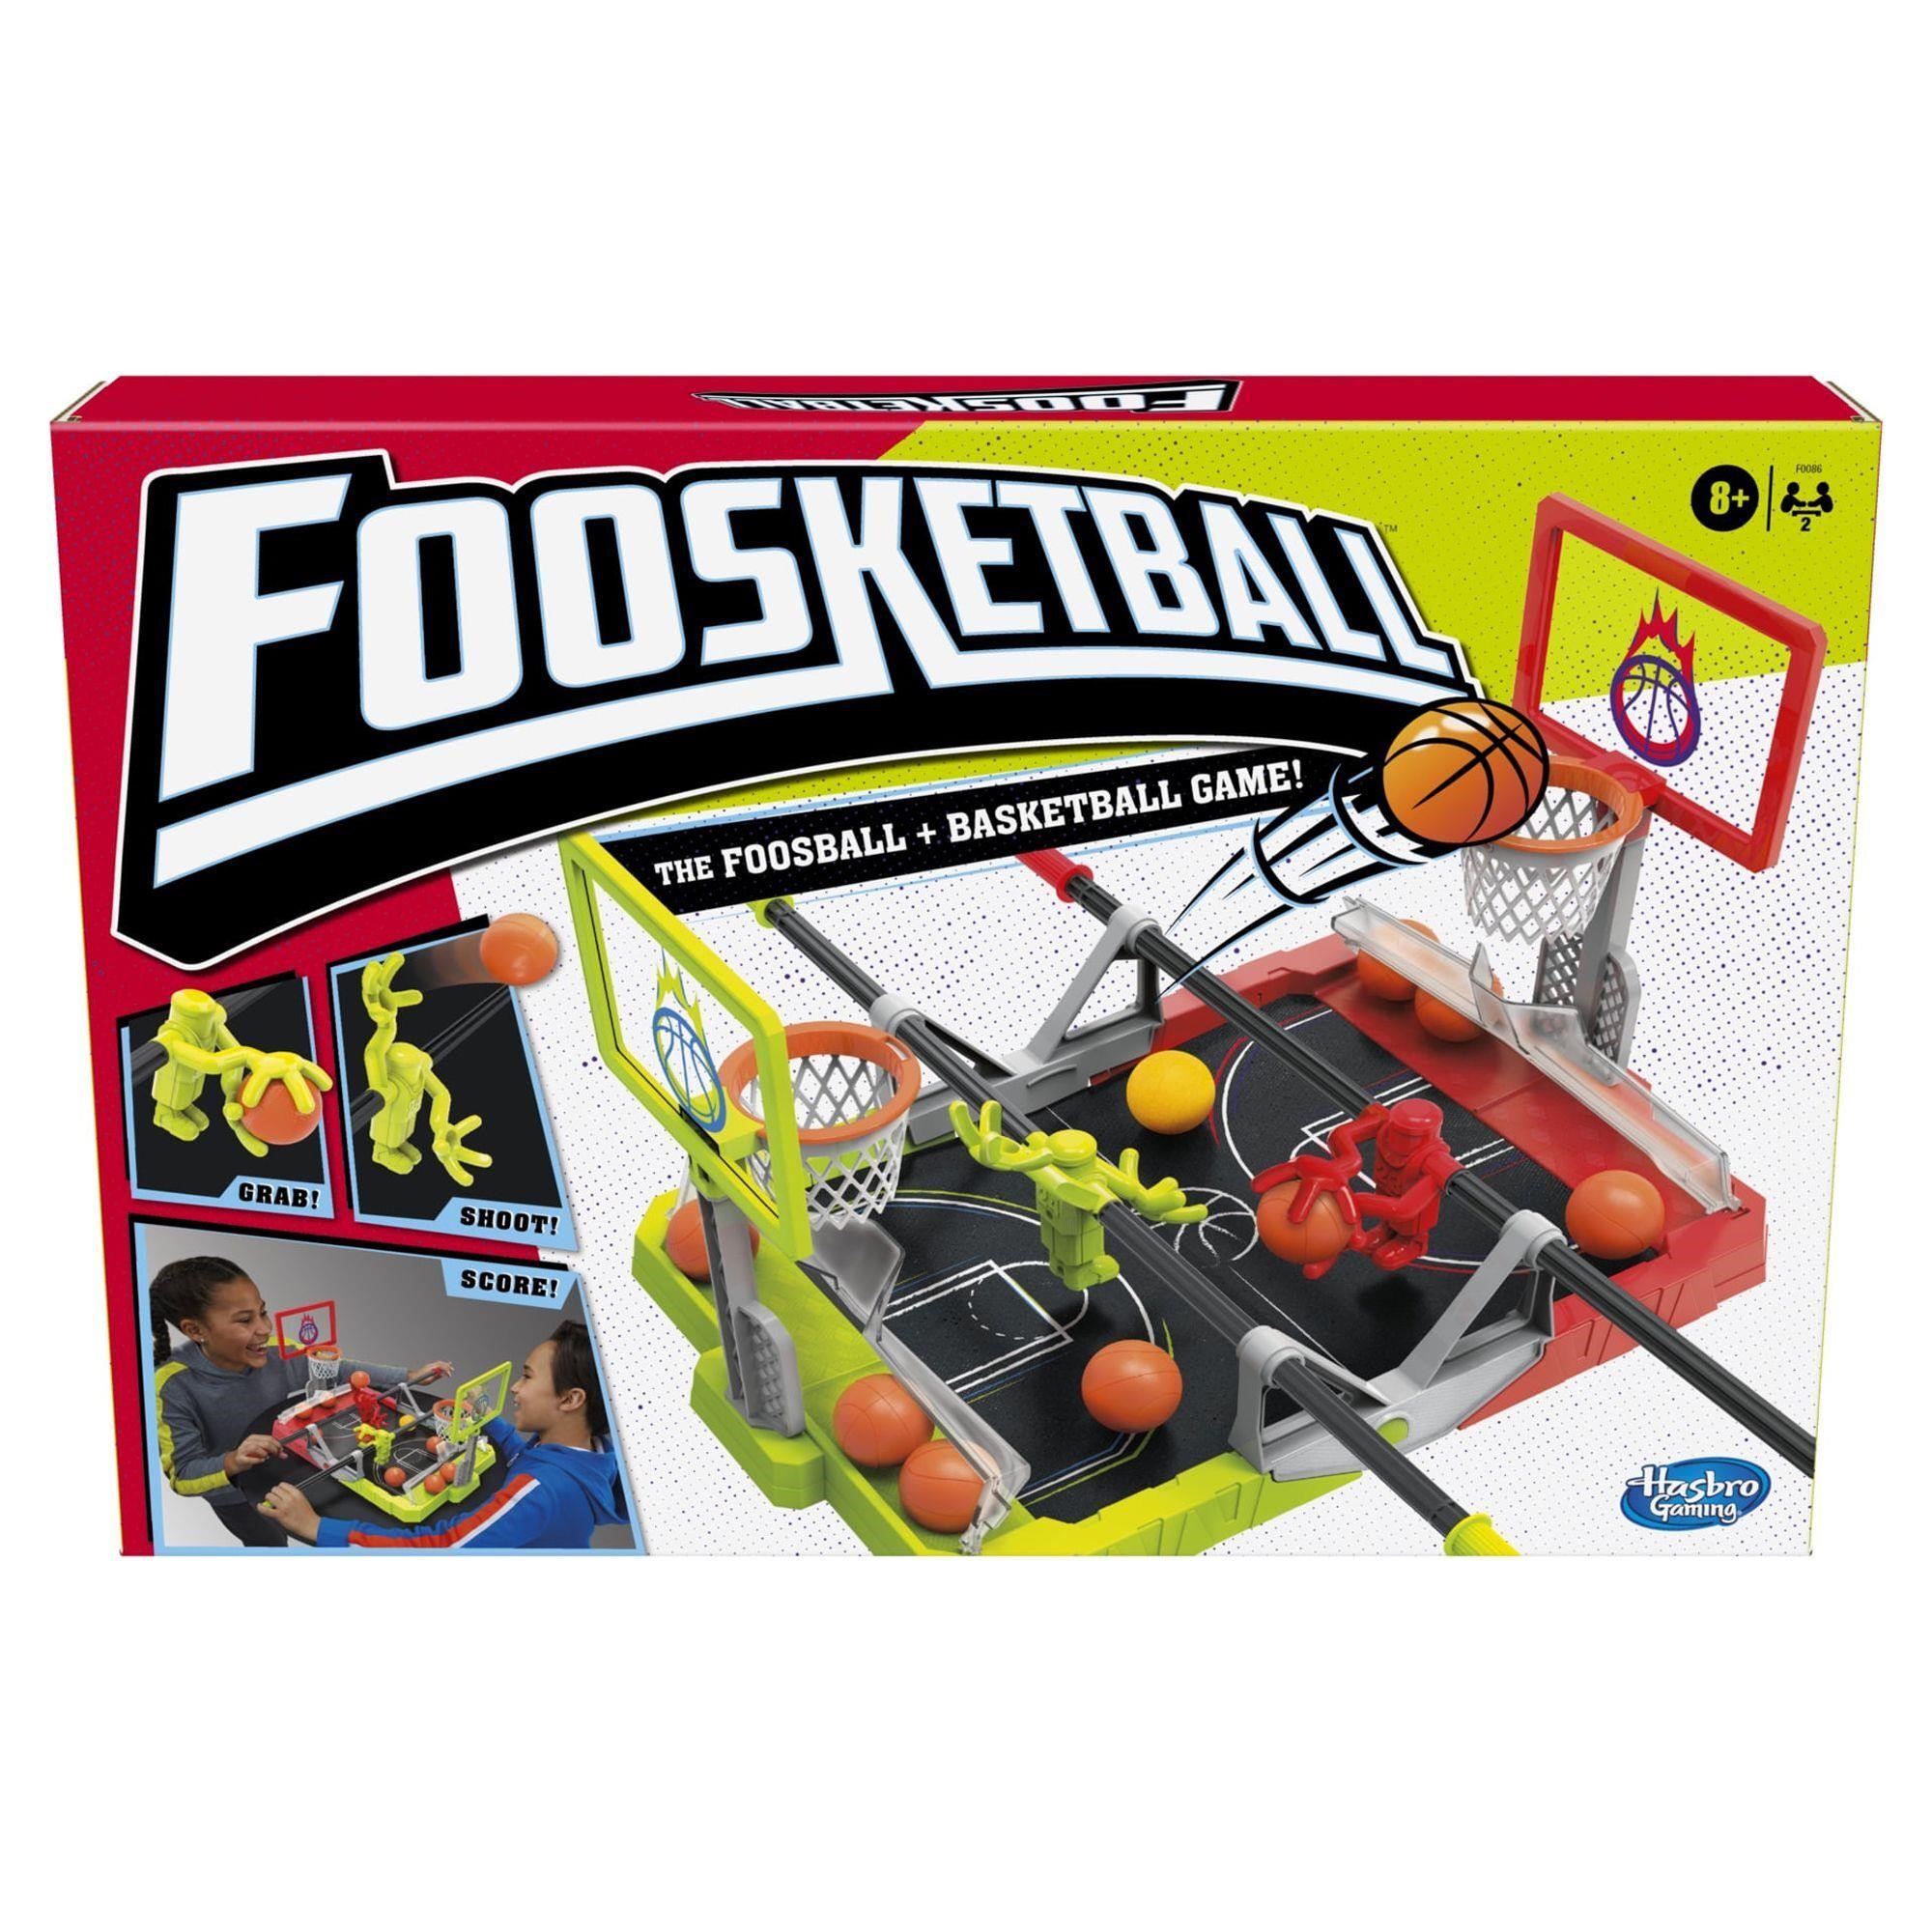 Foosketball Game, Basketball Tabletop Game for Kid